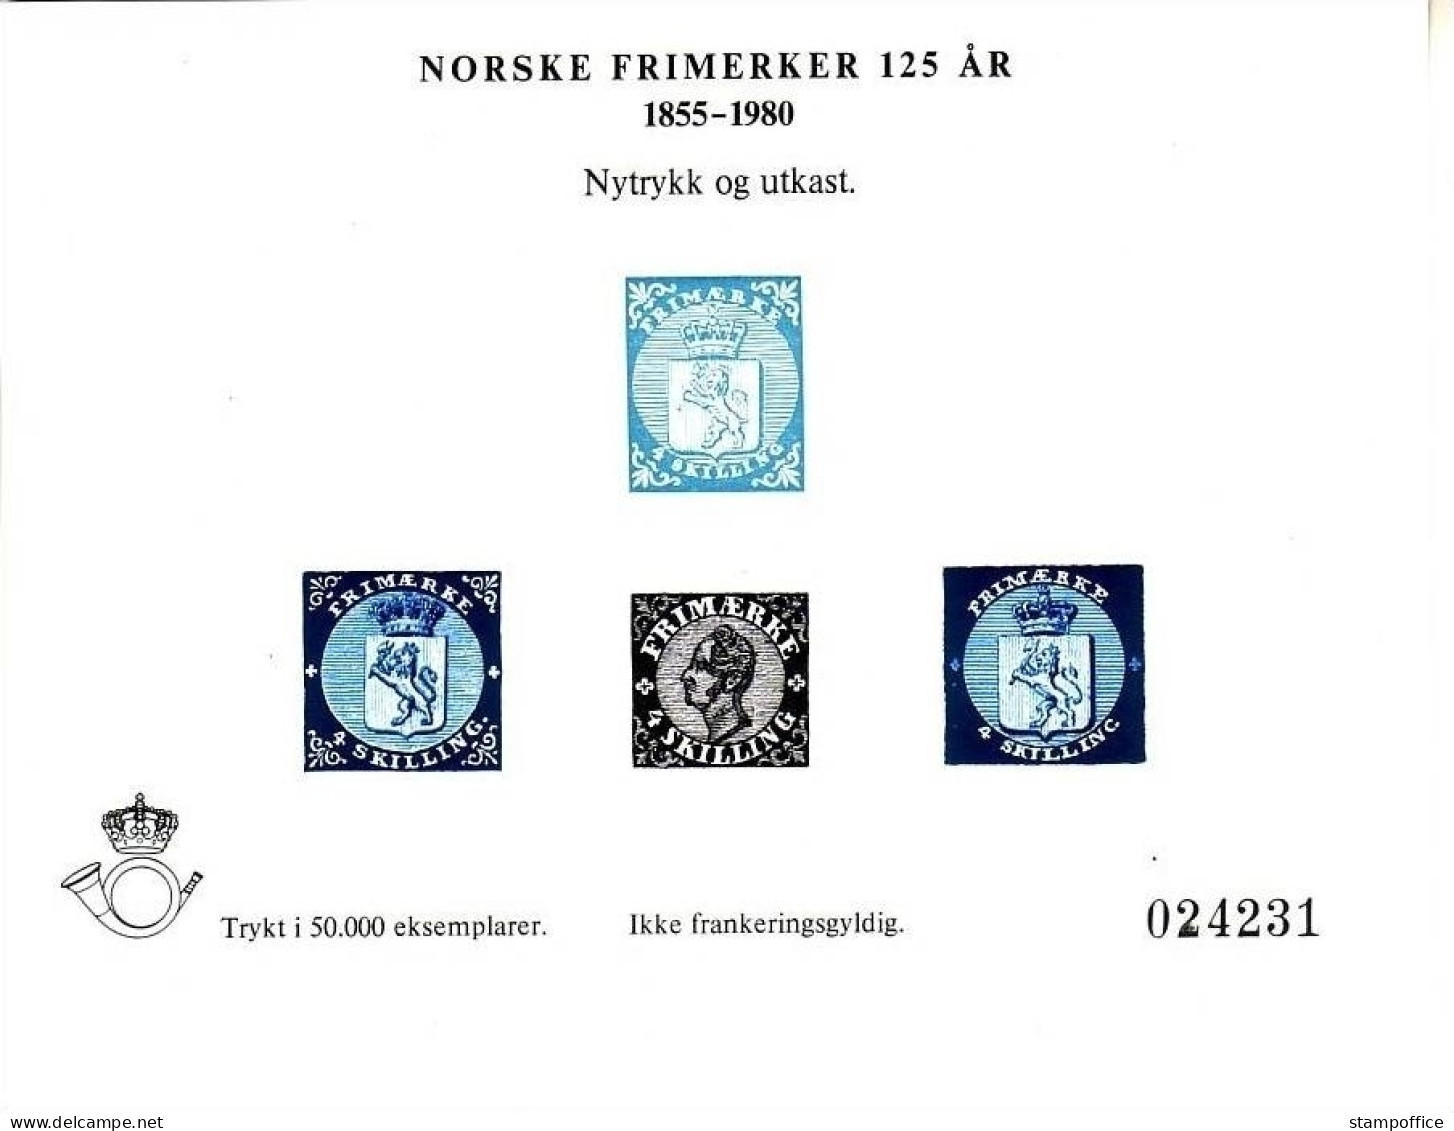 NORWEGEN NORSKE FRIMERKER 125 AR Probedruck 1980 - Ensayos & Reimpresiones